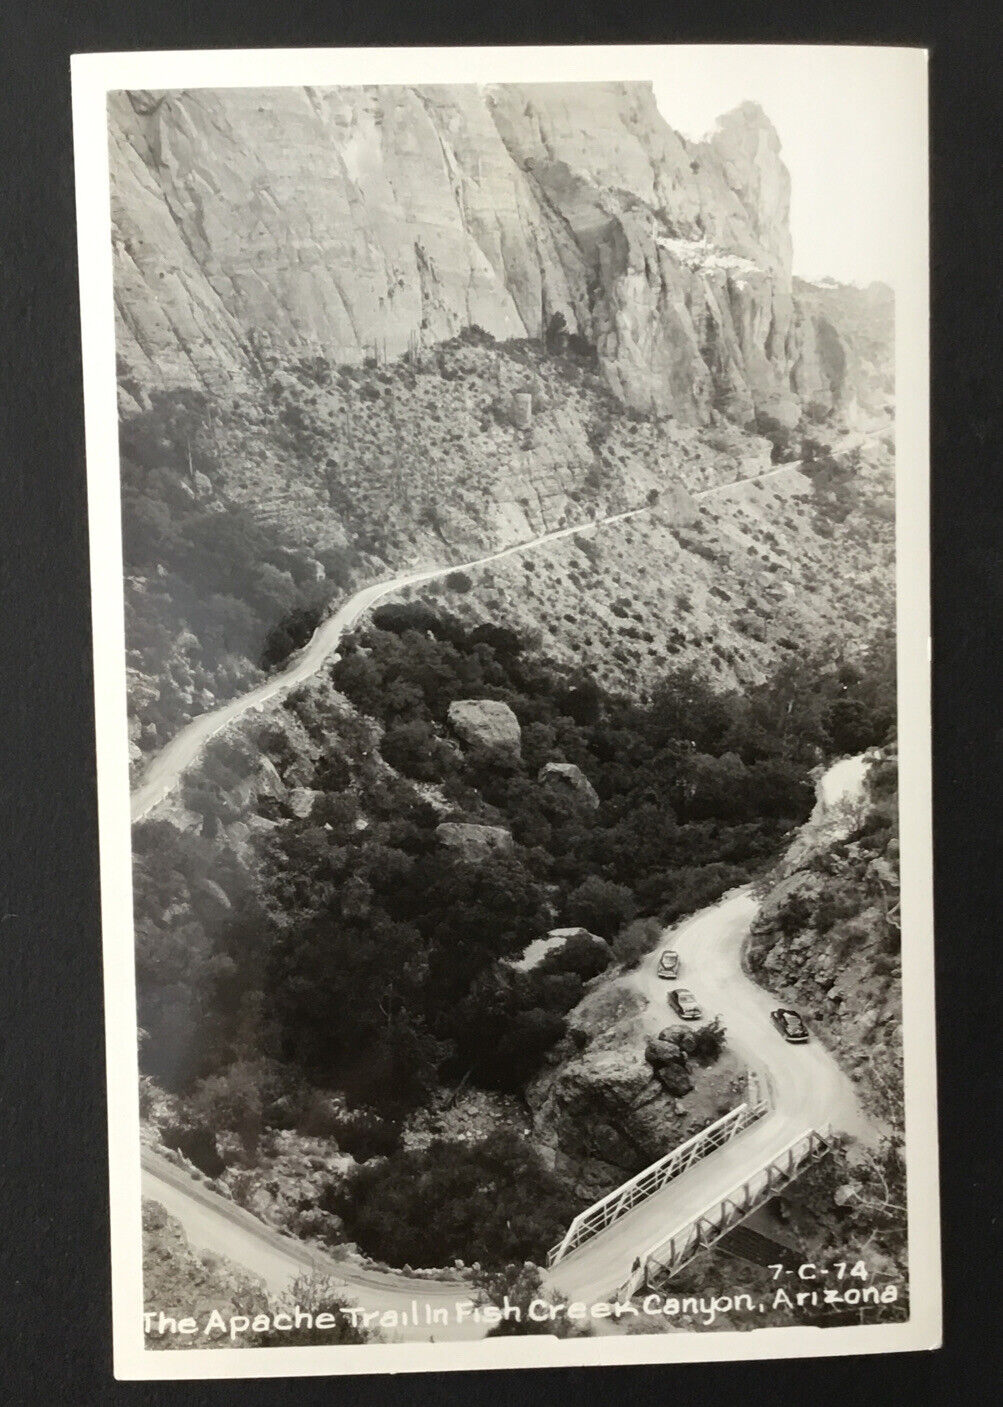 Arizona Apache Trail in Fish Creek Canyon, Cars & Bridge c1940s RPPC Postcard